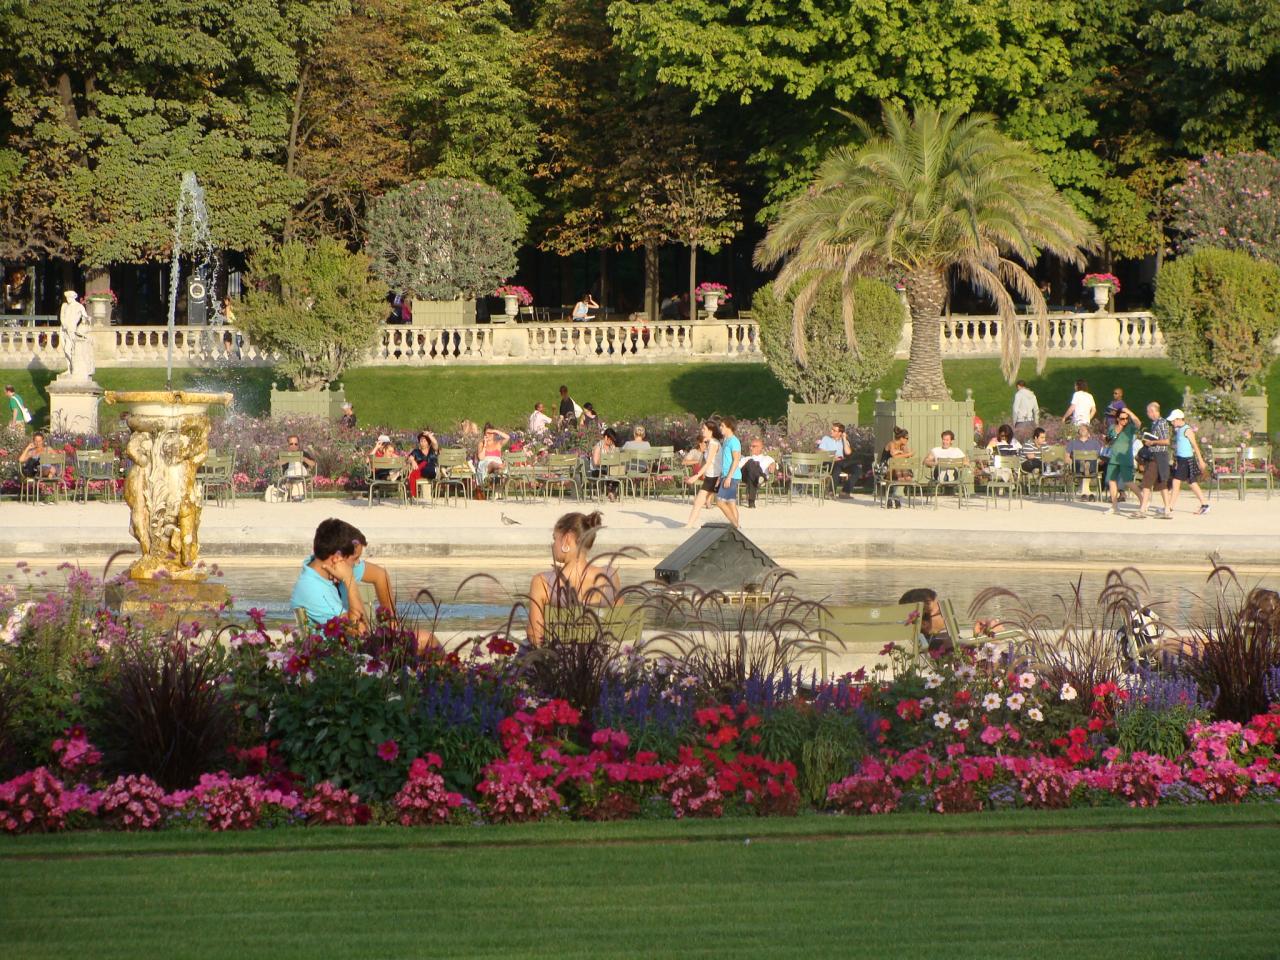  Paris - Jardin du Luxembourg 2